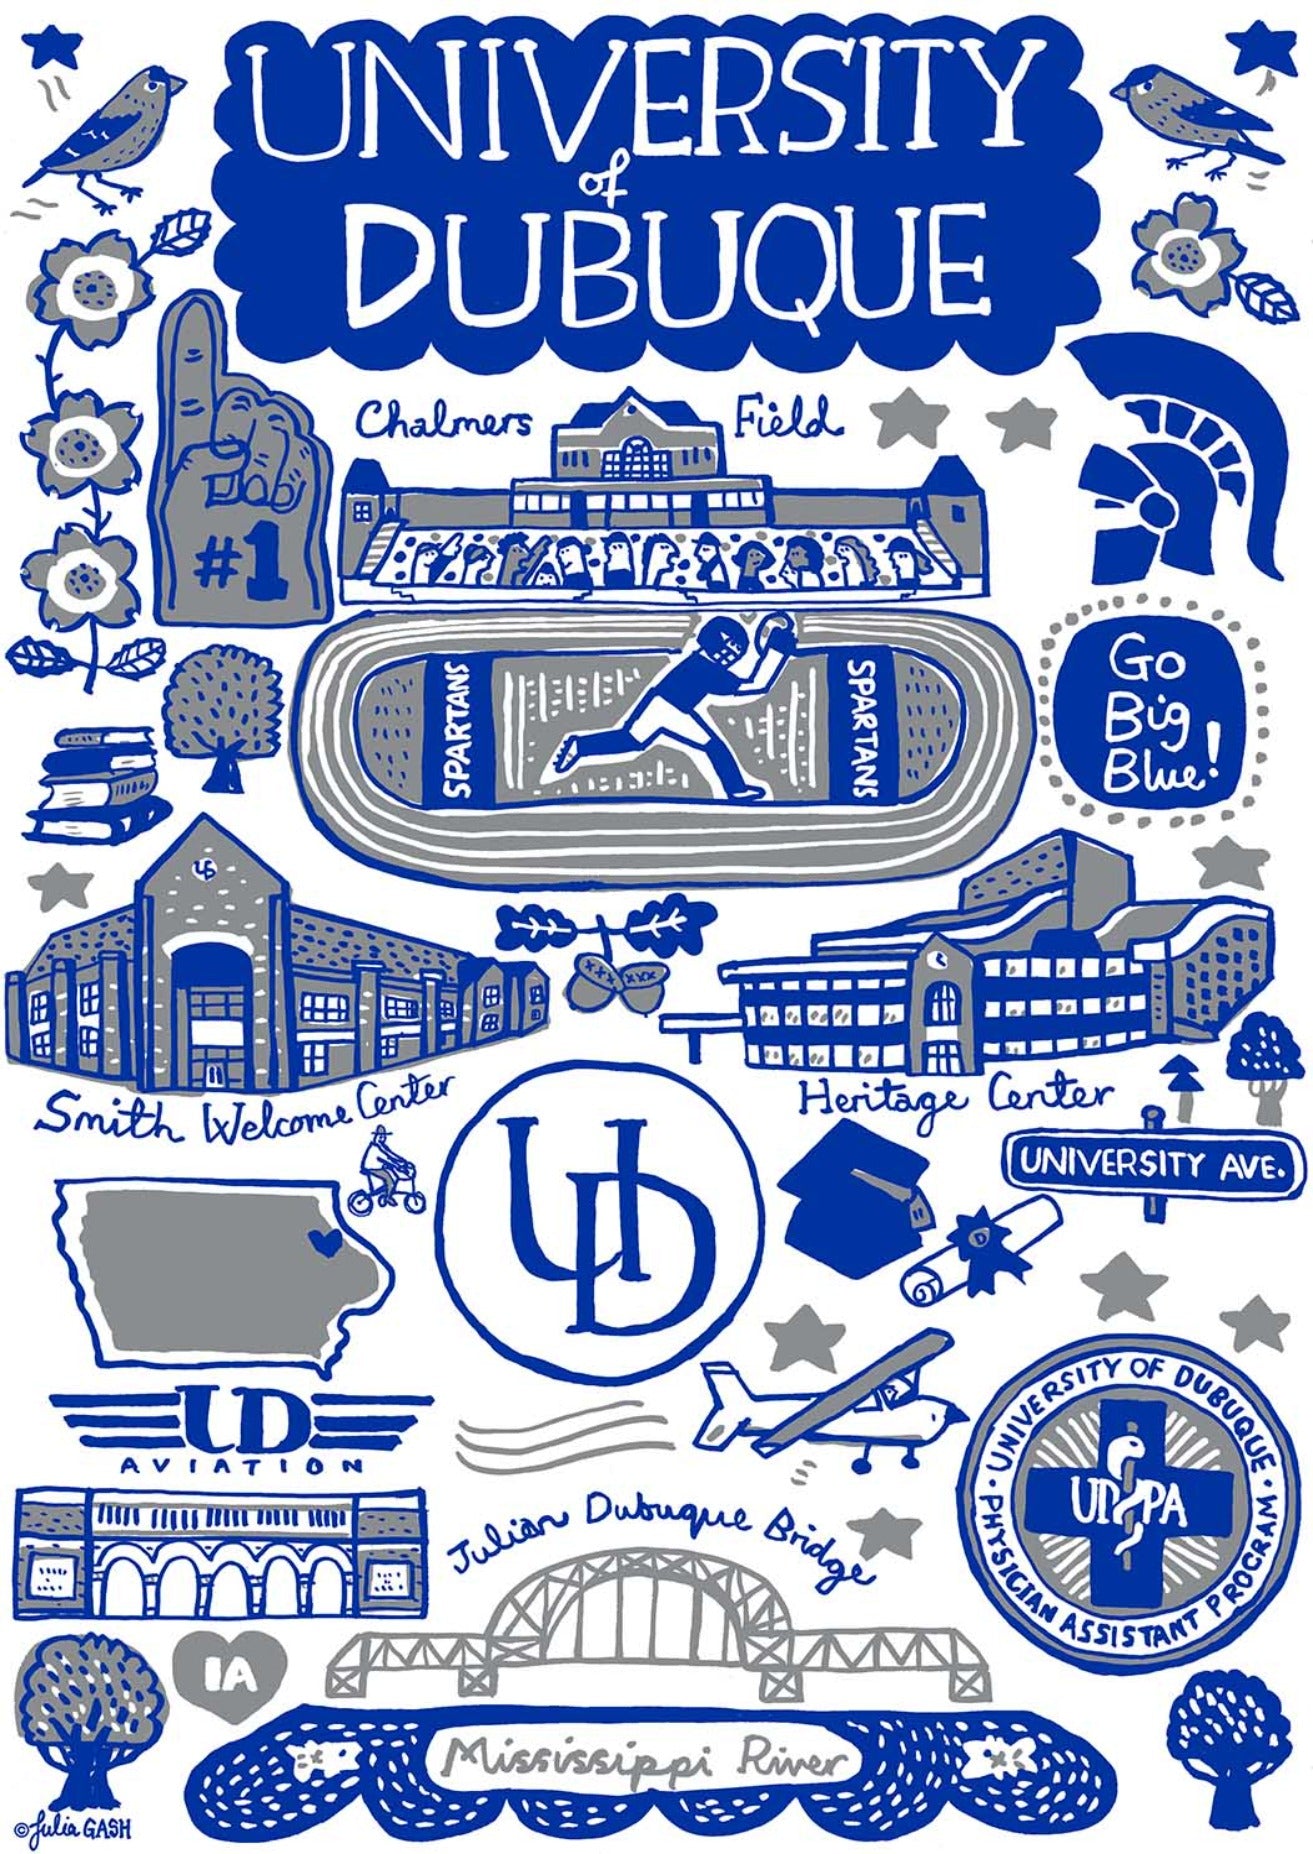 University of Dubuque by Julia Gash